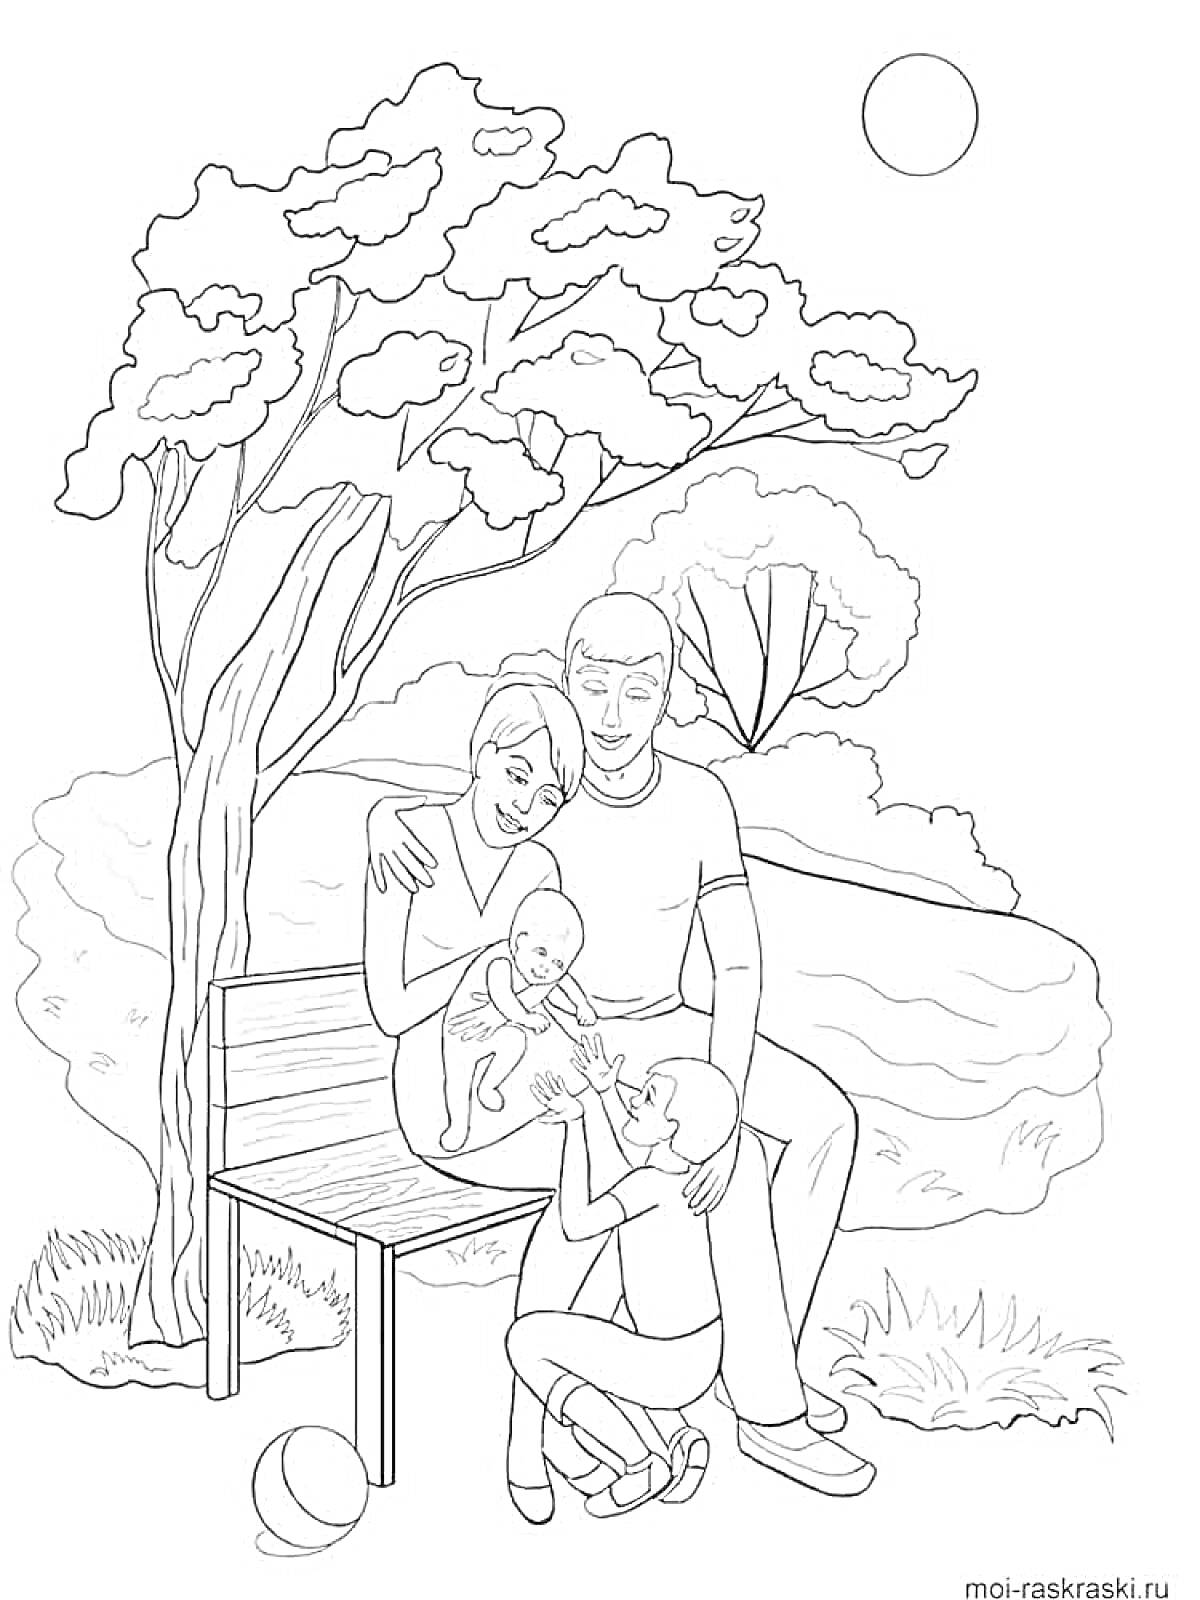 Раскраска Семья на прогулке: родители сидят на скамейке с младенцем на руках и ребенок стоит рядом, дерево, солнце, кусты и мяч на траве